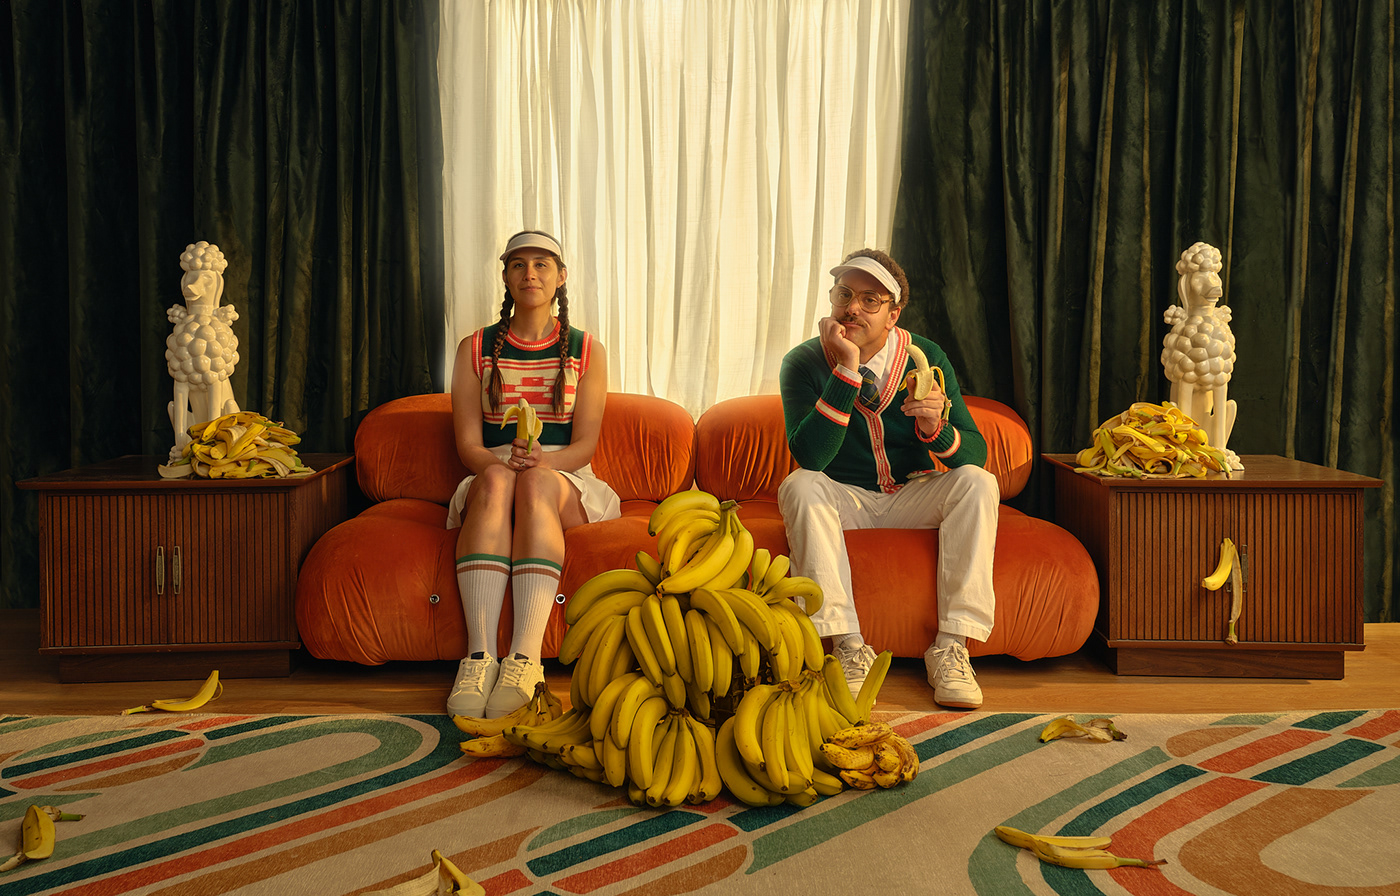 Bananas couple holiday card Mario Bellini Photography  portrait stylized surreal' Ted Lasso visor